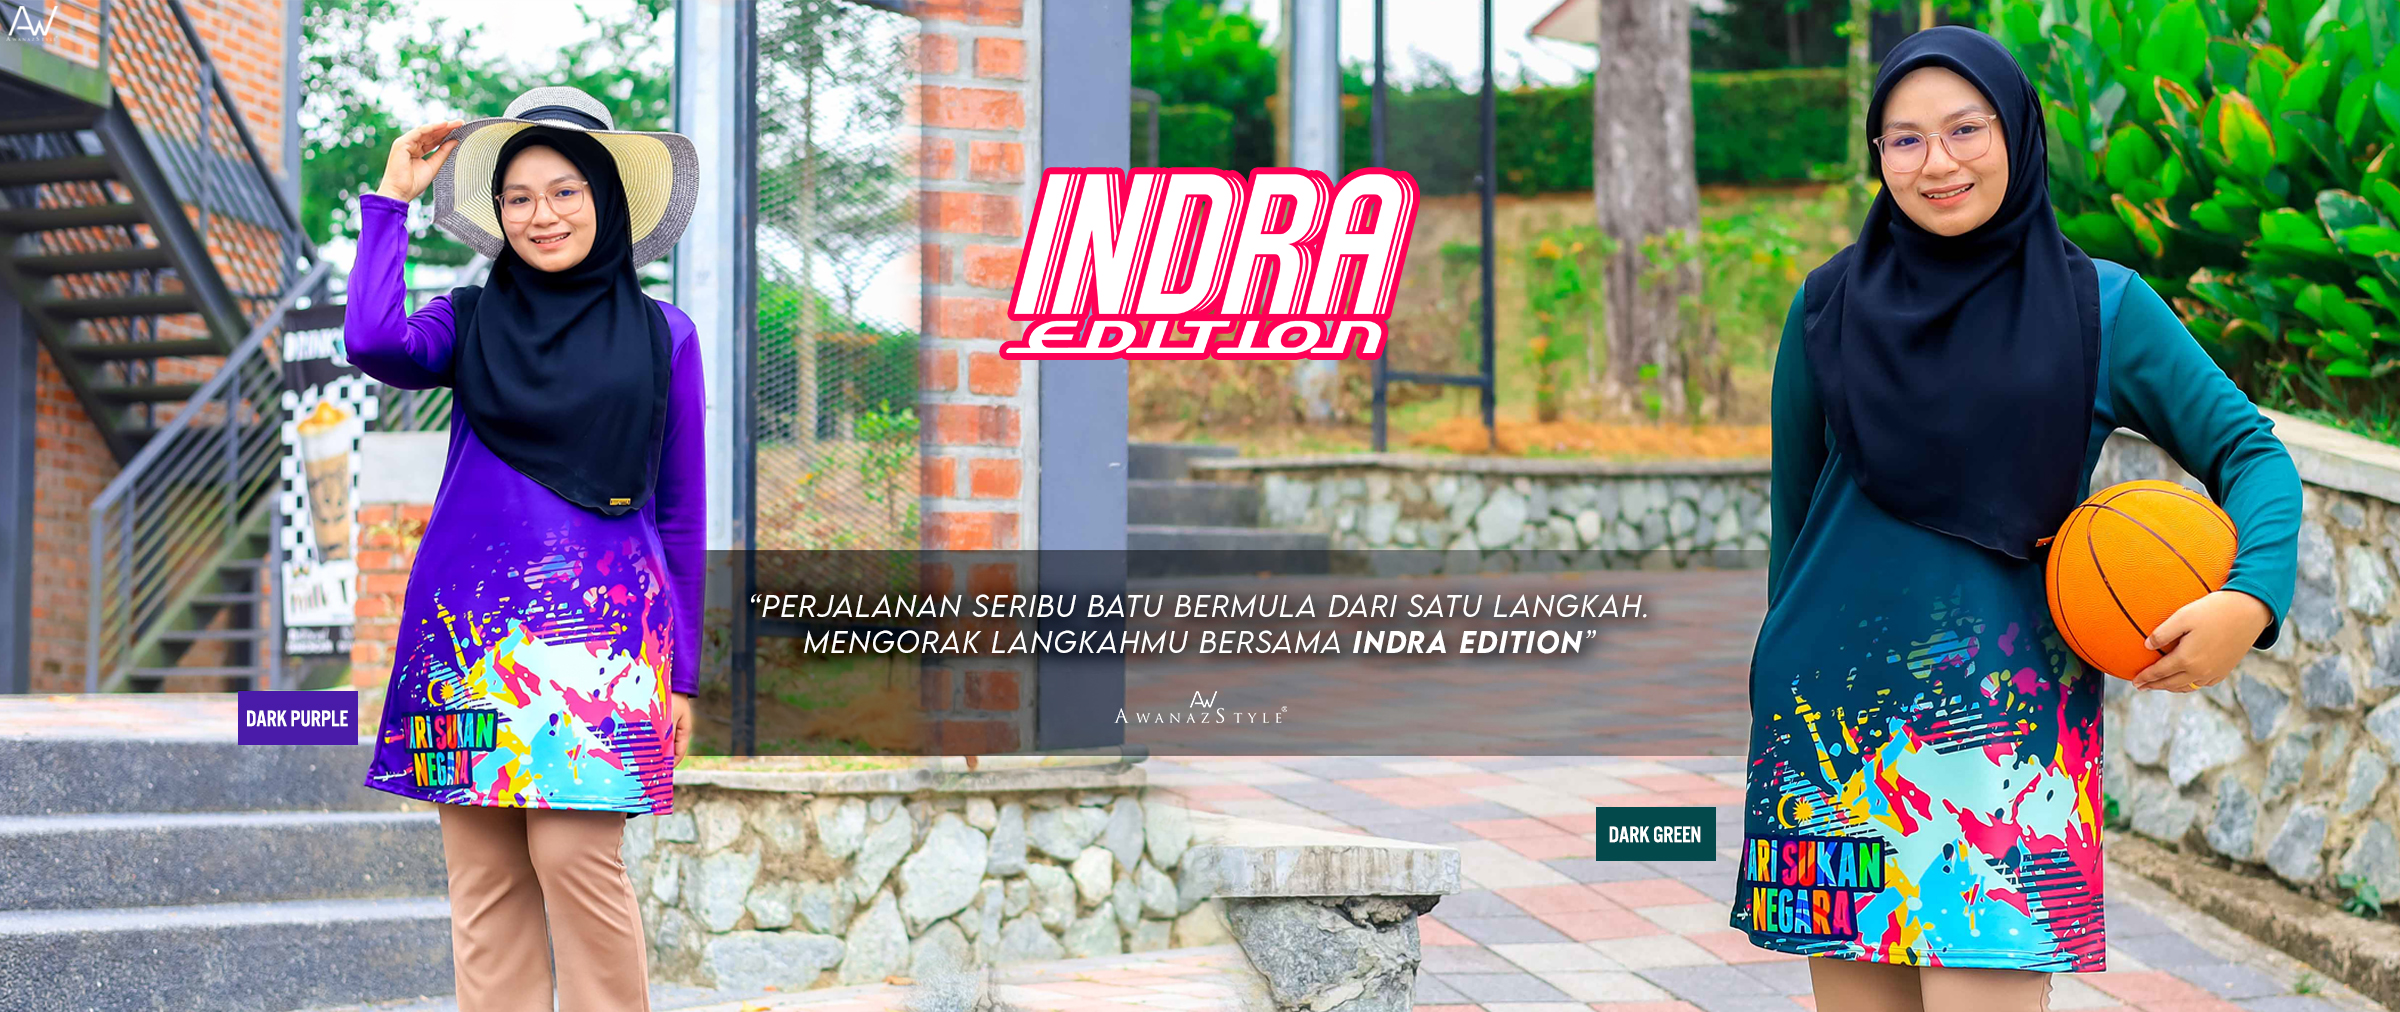 00 - Indra edition